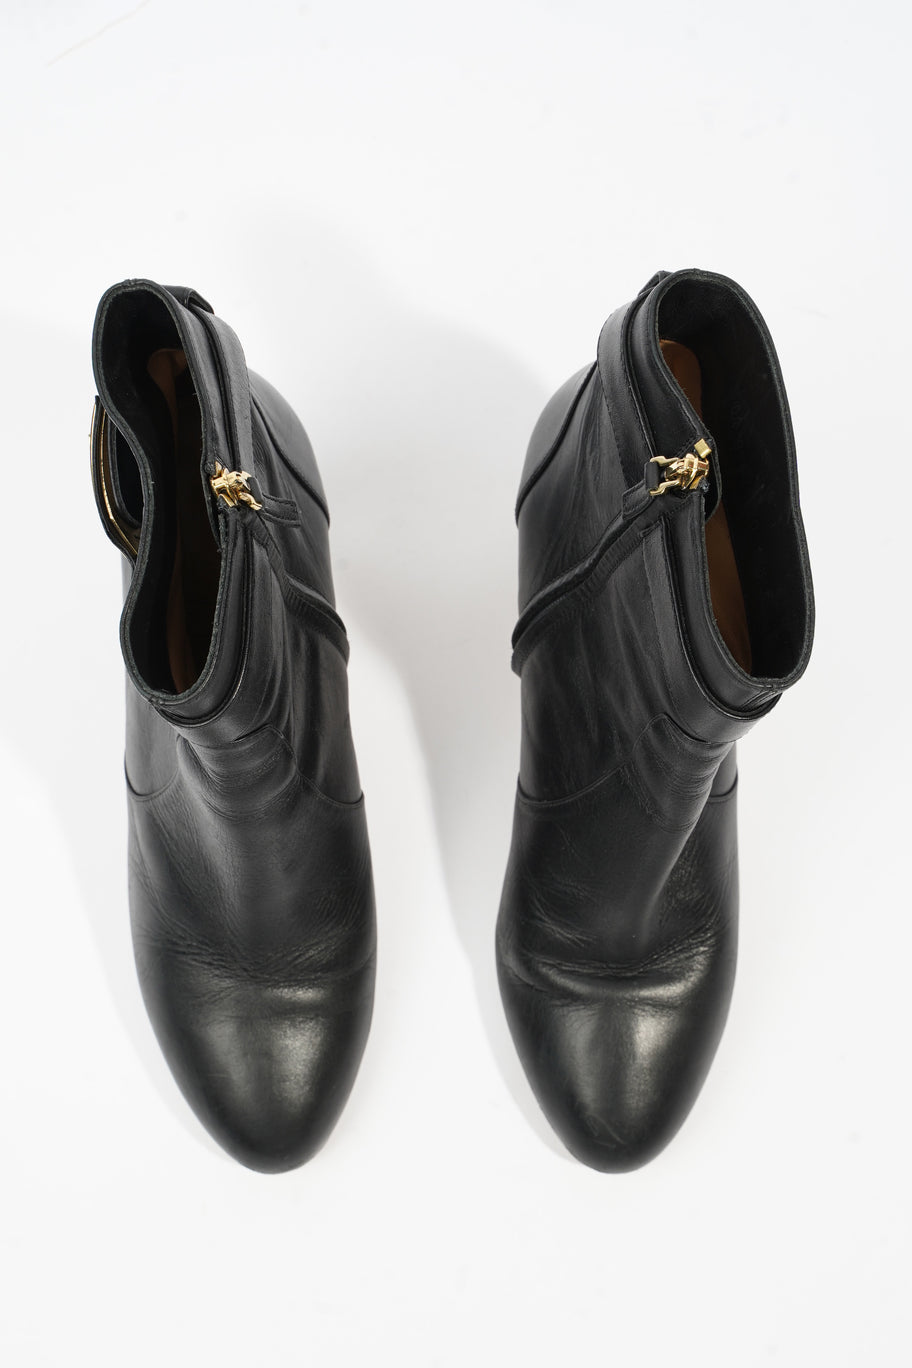 Ankle Boot Black Leather EU 41.5 UK 8.5 Image 8